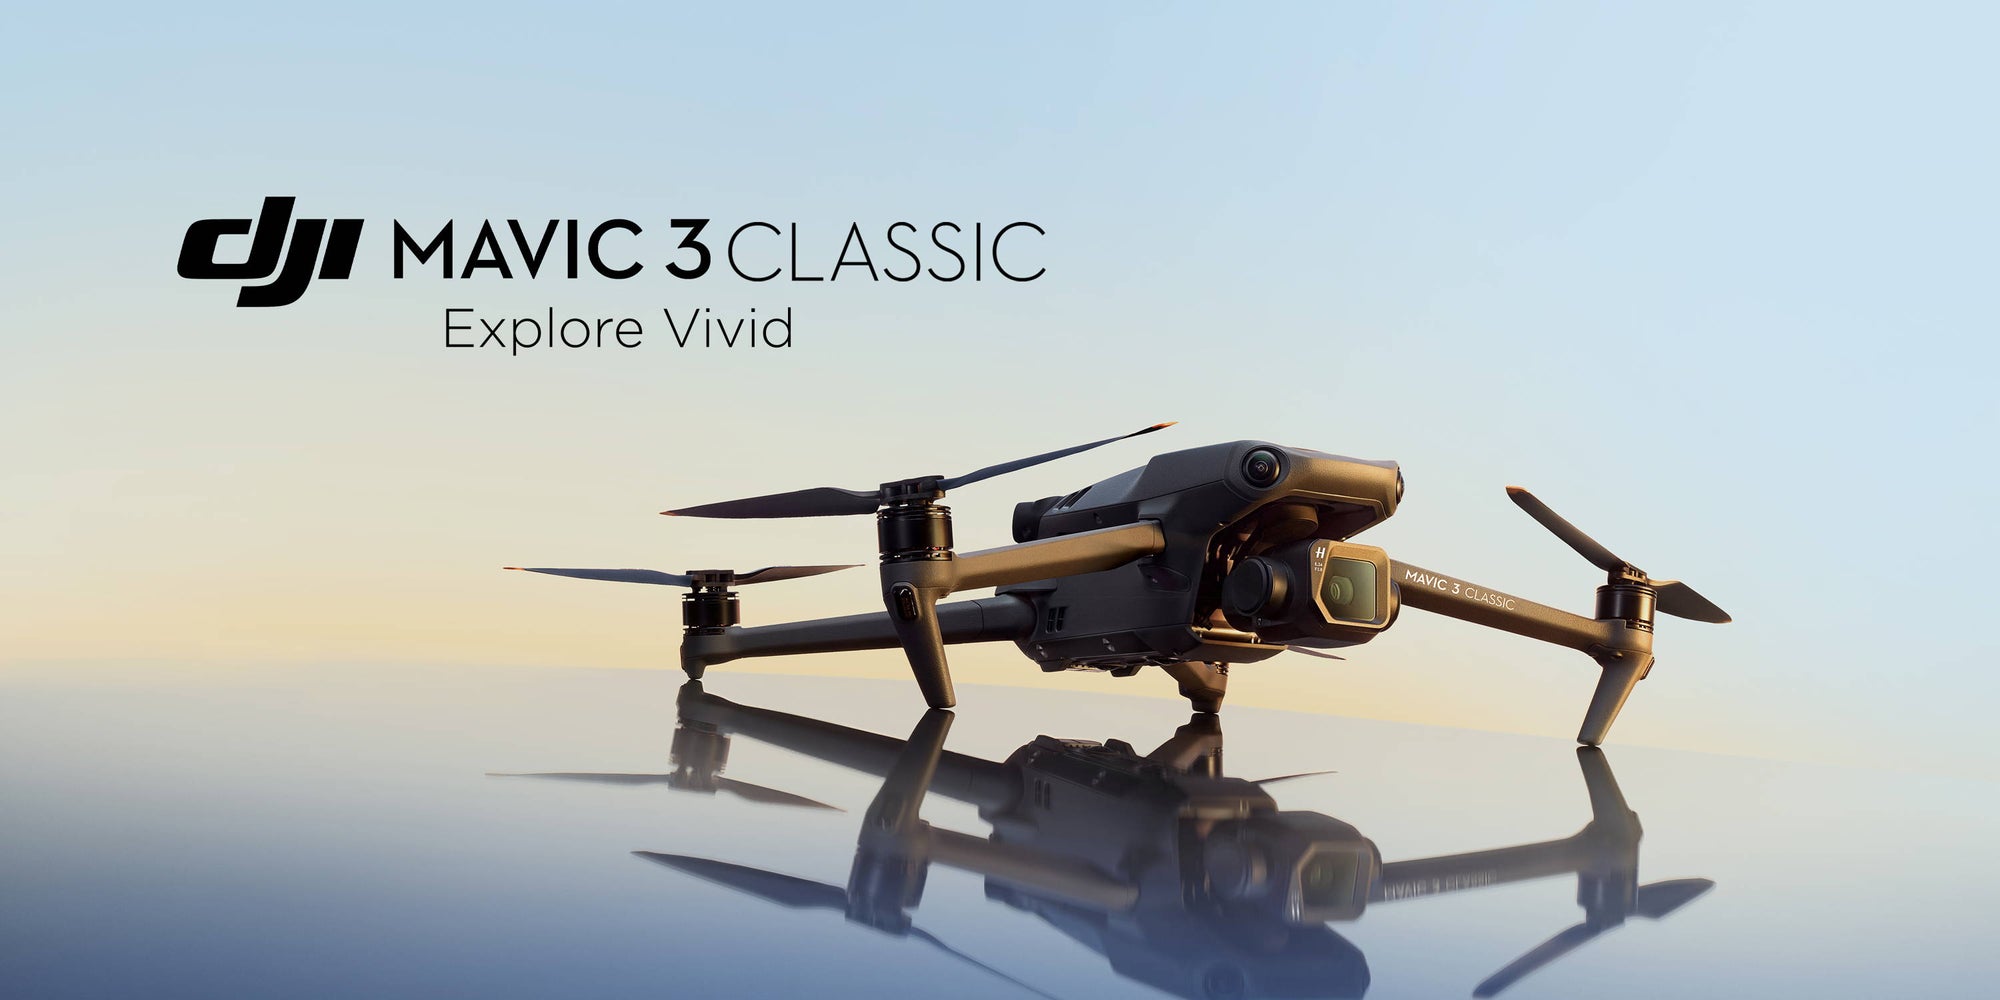 Explore Vivid: DJI Releases The New Mavic 3 Classic